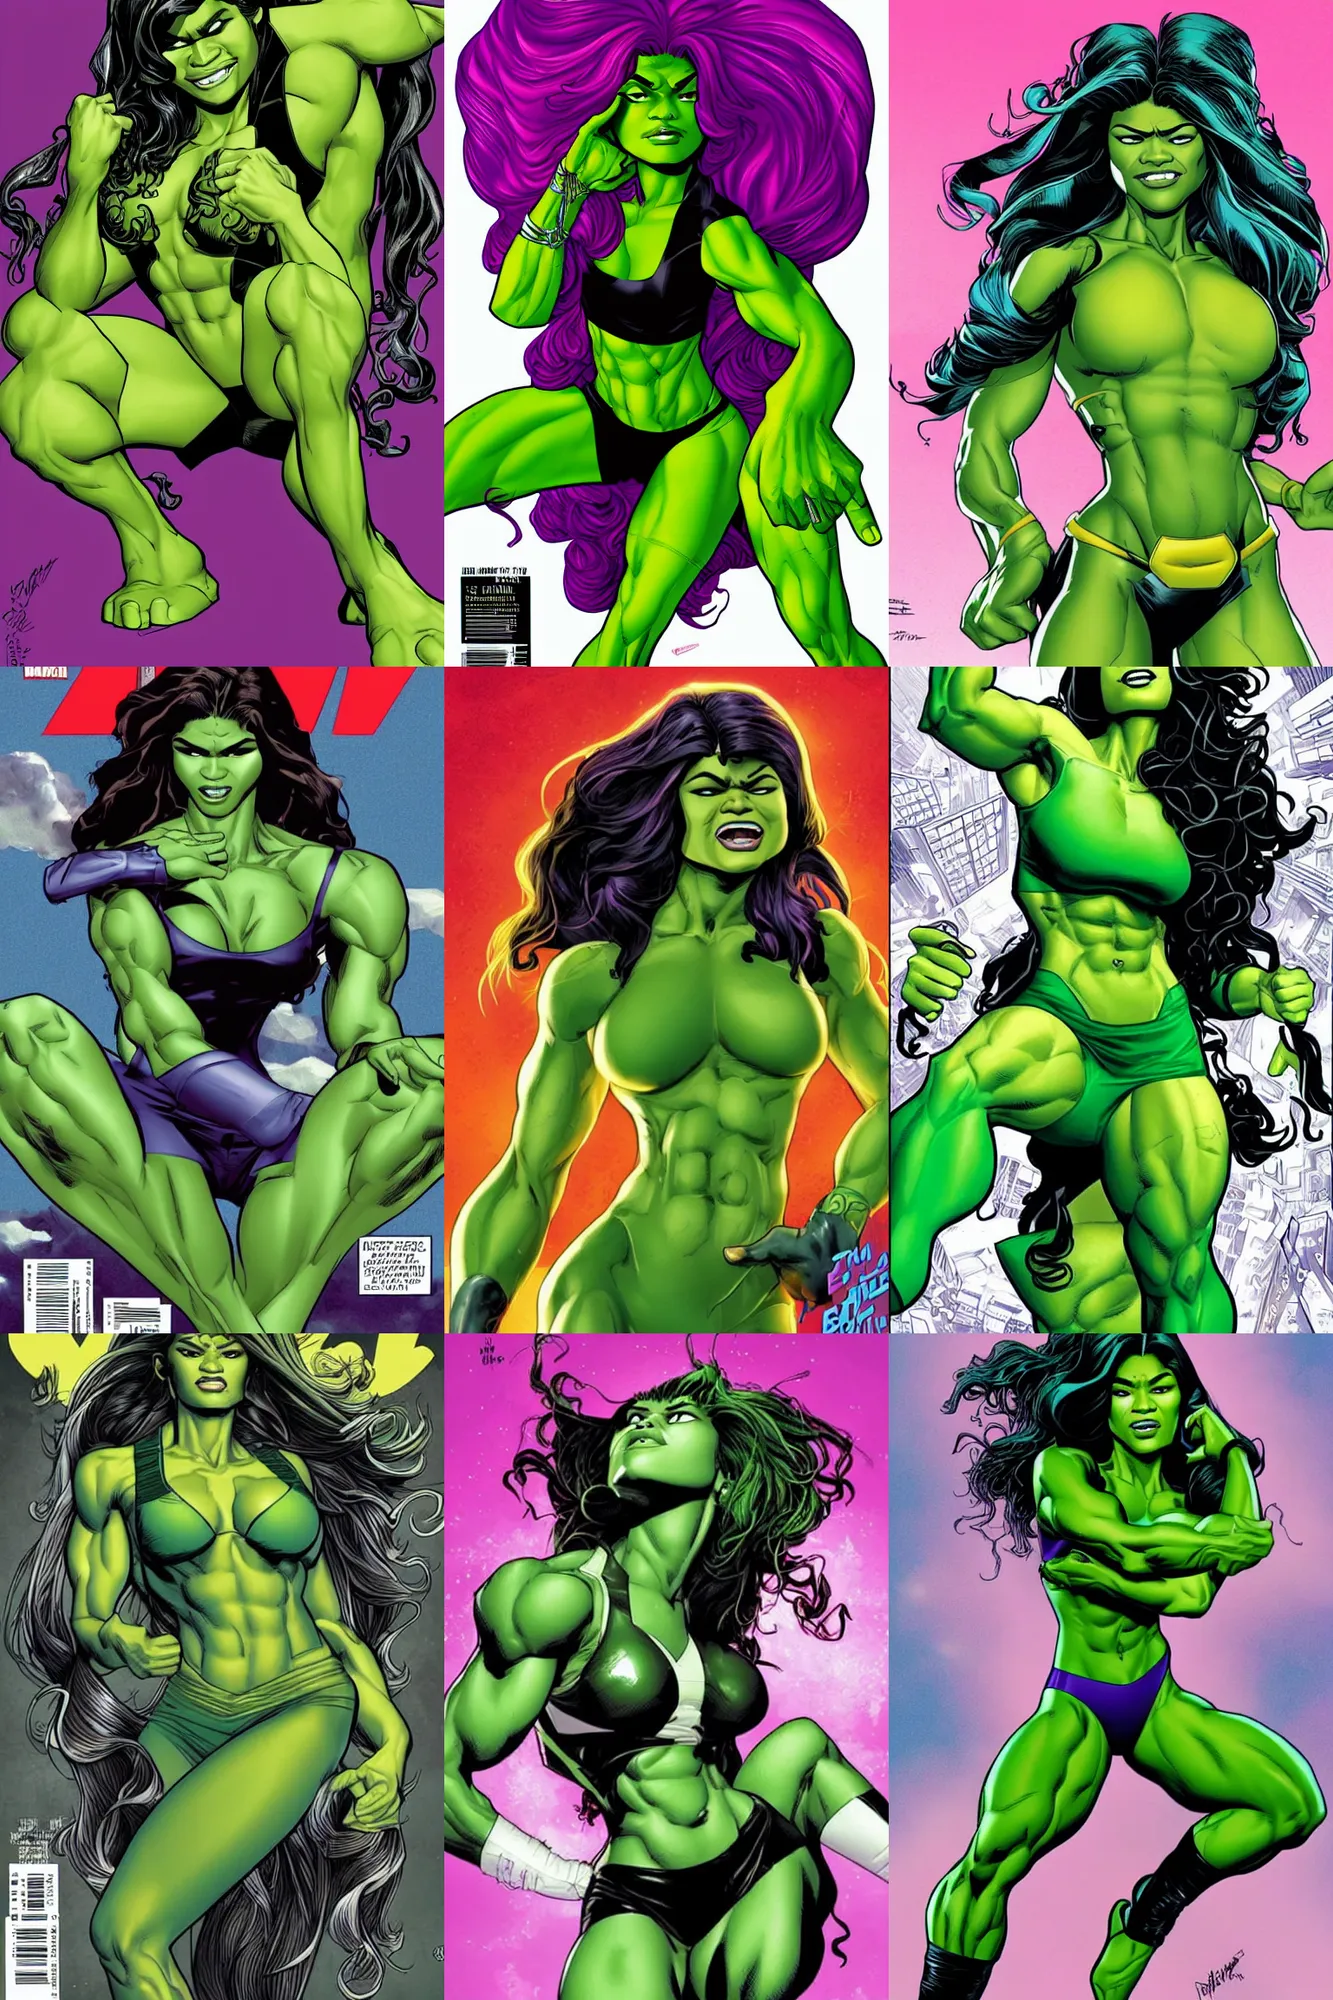 Prompt: Zendaya as She-Hulk, long hair, stunning figure, alt cover illustration beautiful